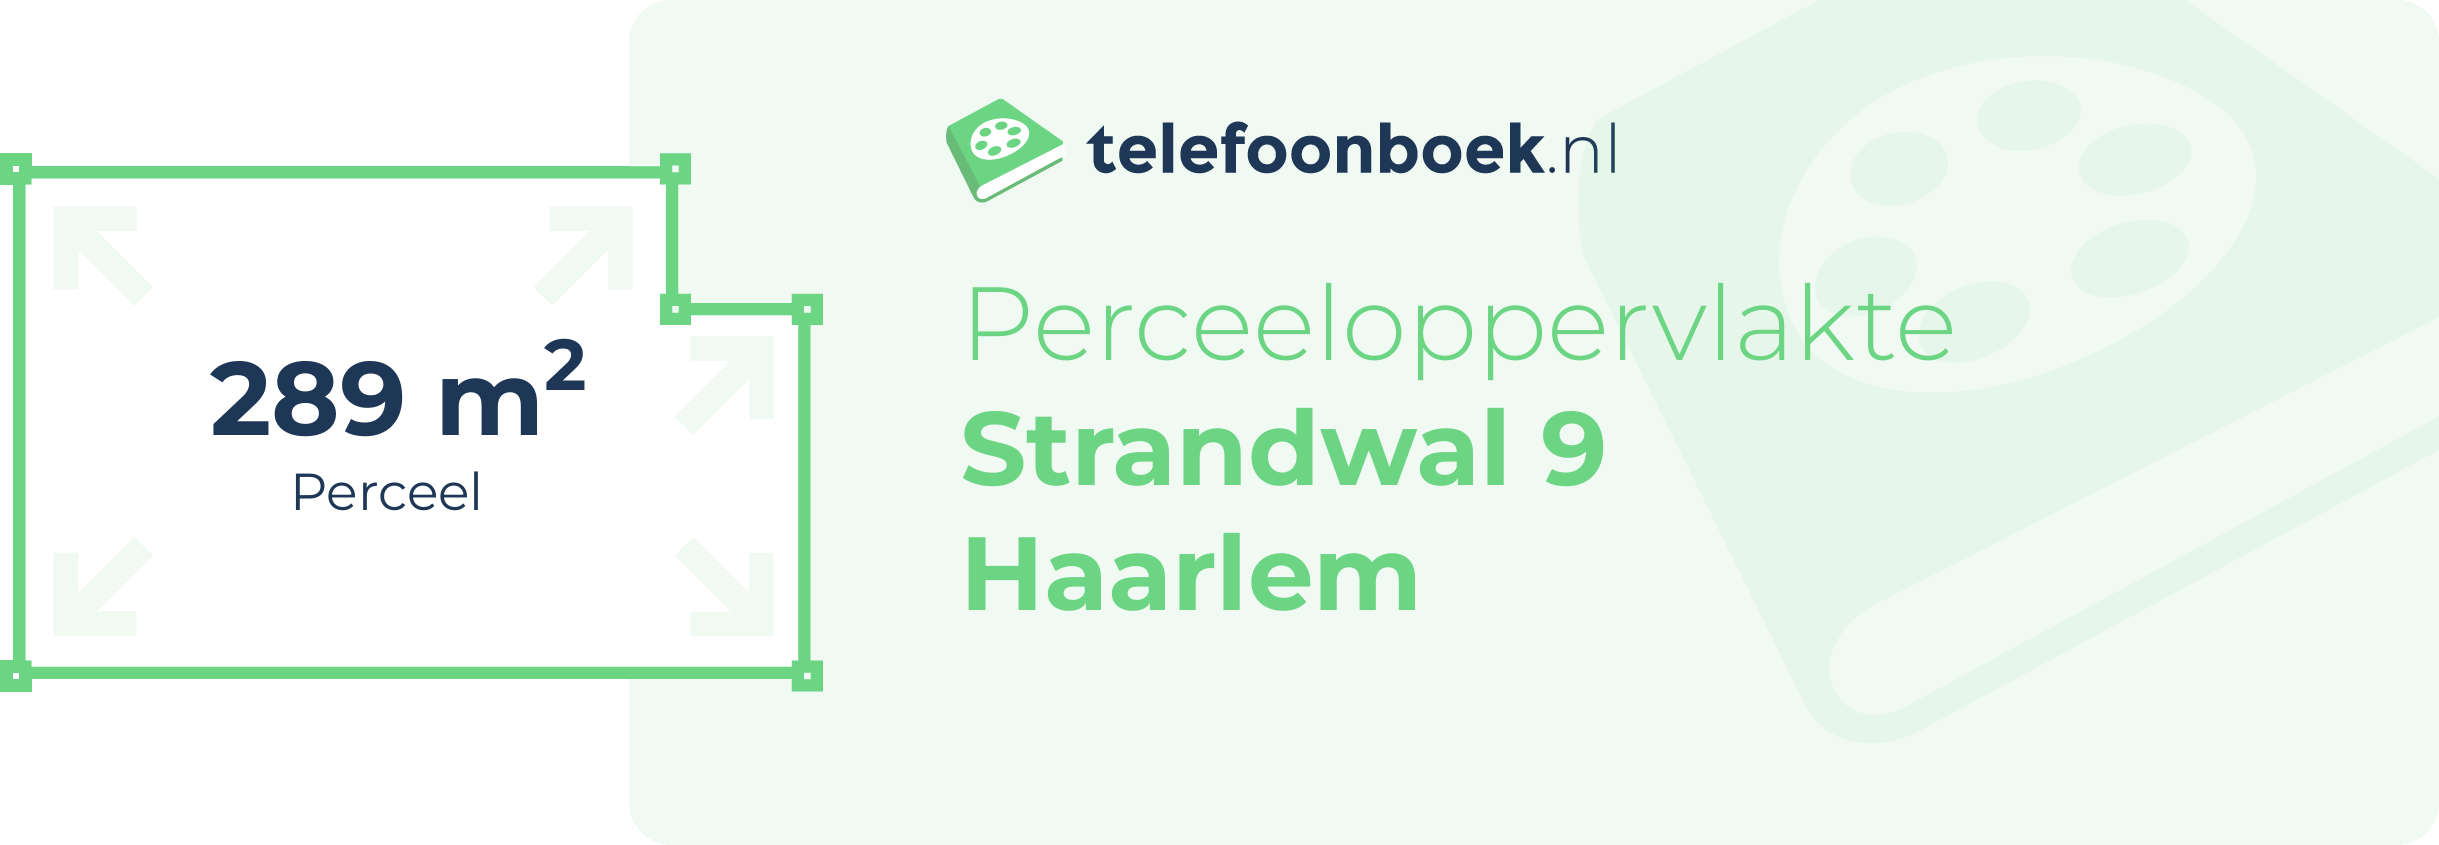 Perceeloppervlakte Strandwal 9 Haarlem